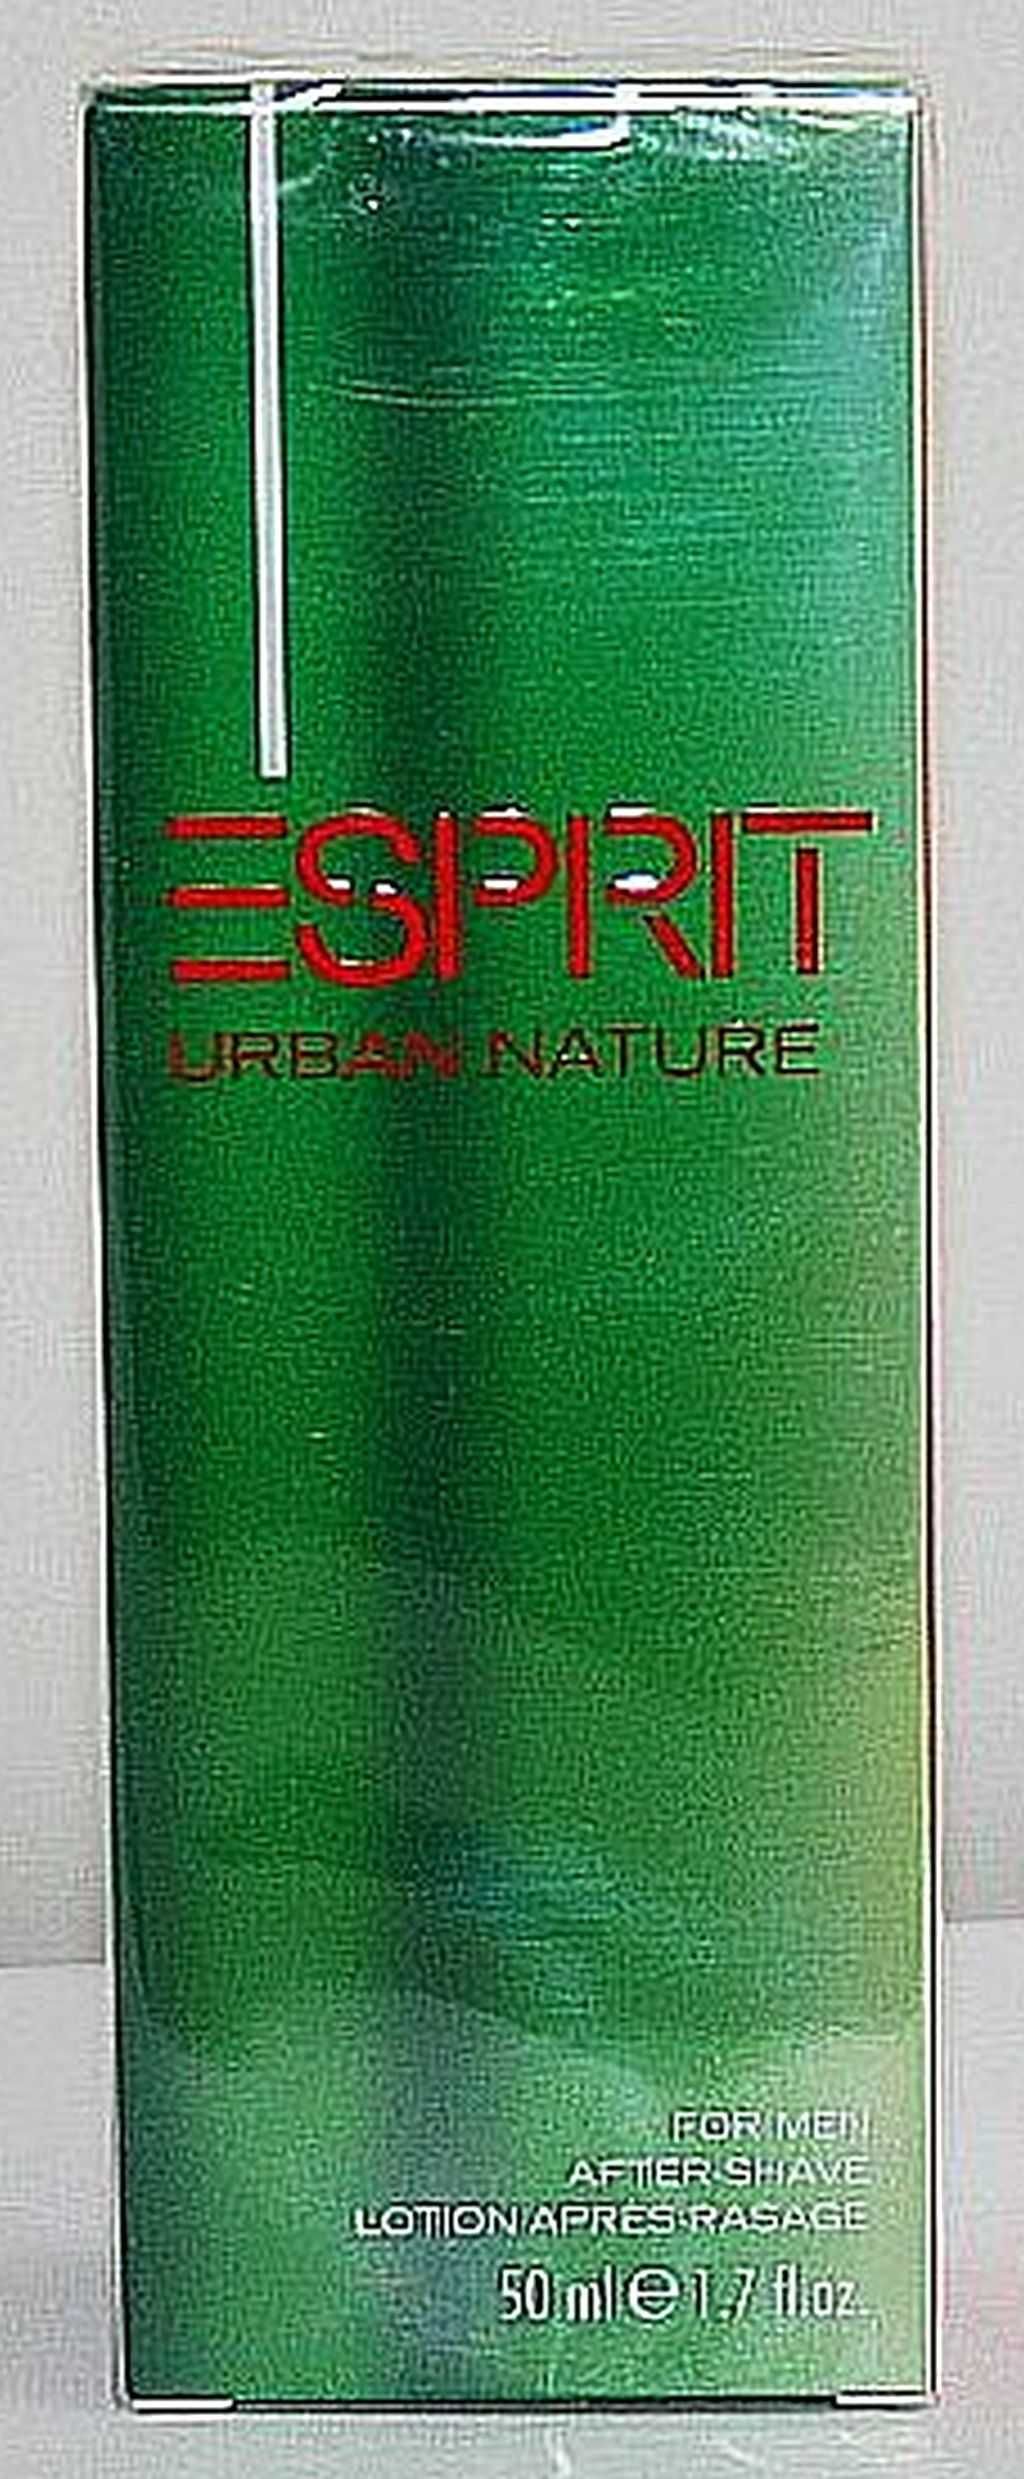 Esprit Urban Nature Men AS 50ml  Woda po goleniu nie spray